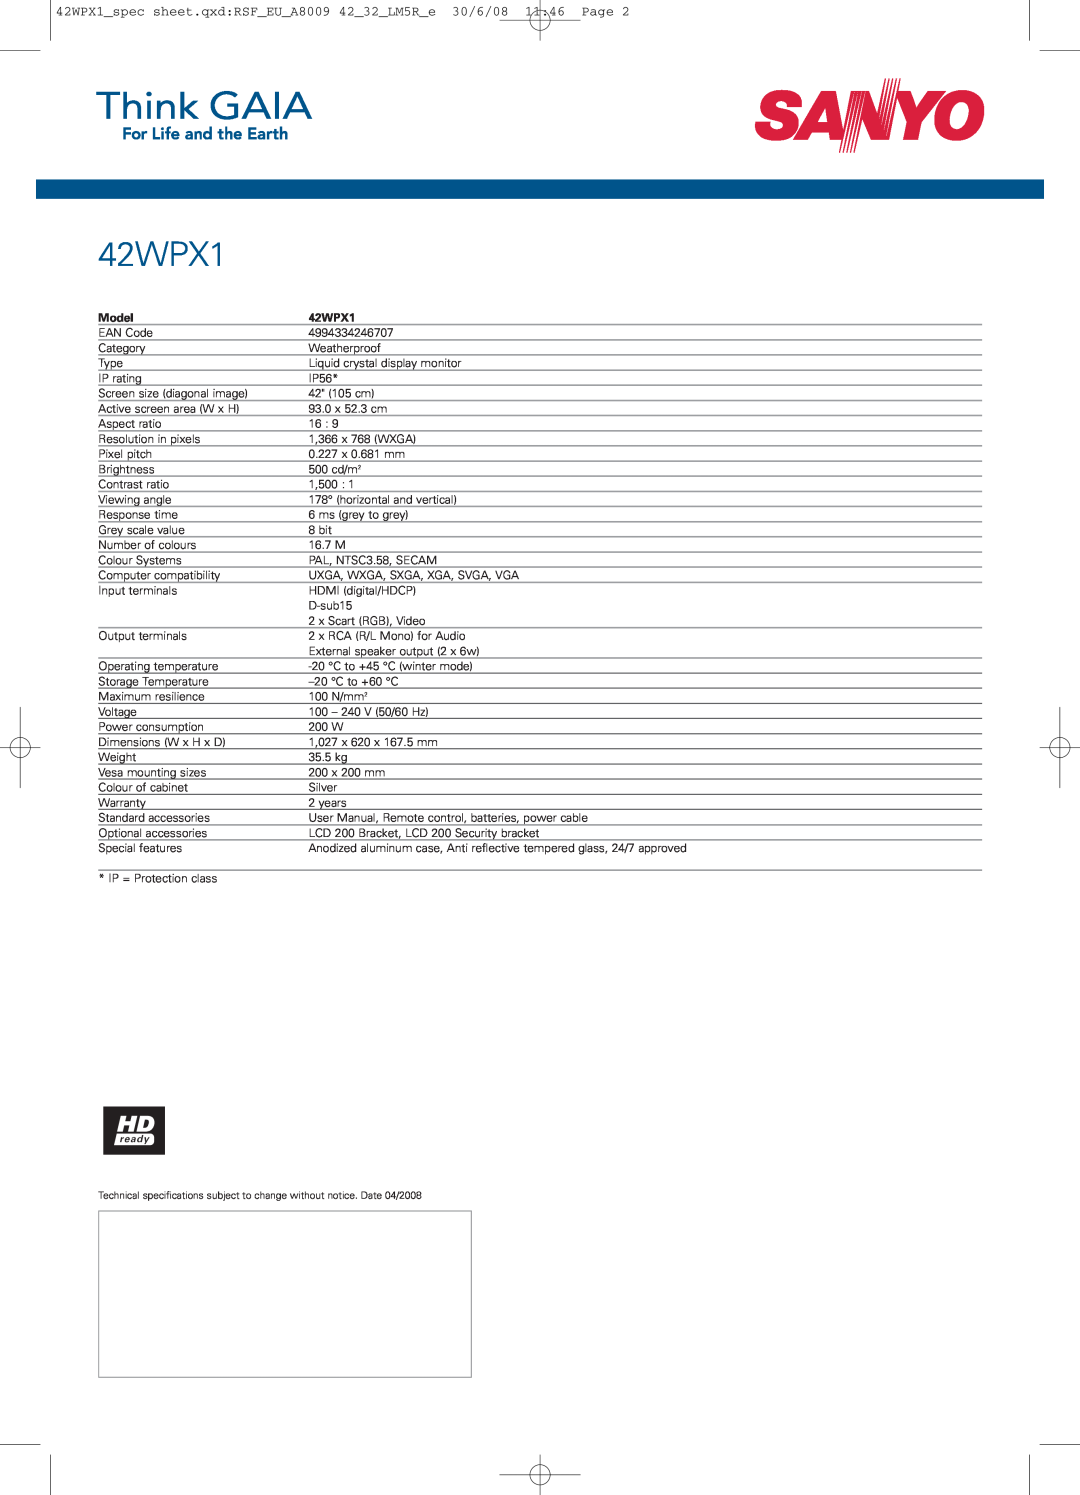 Sanyo manual 42WPX1spec sheet.qxdRSFEUA8009 4232LM5Re 30/6/08 1146 Page, Model 